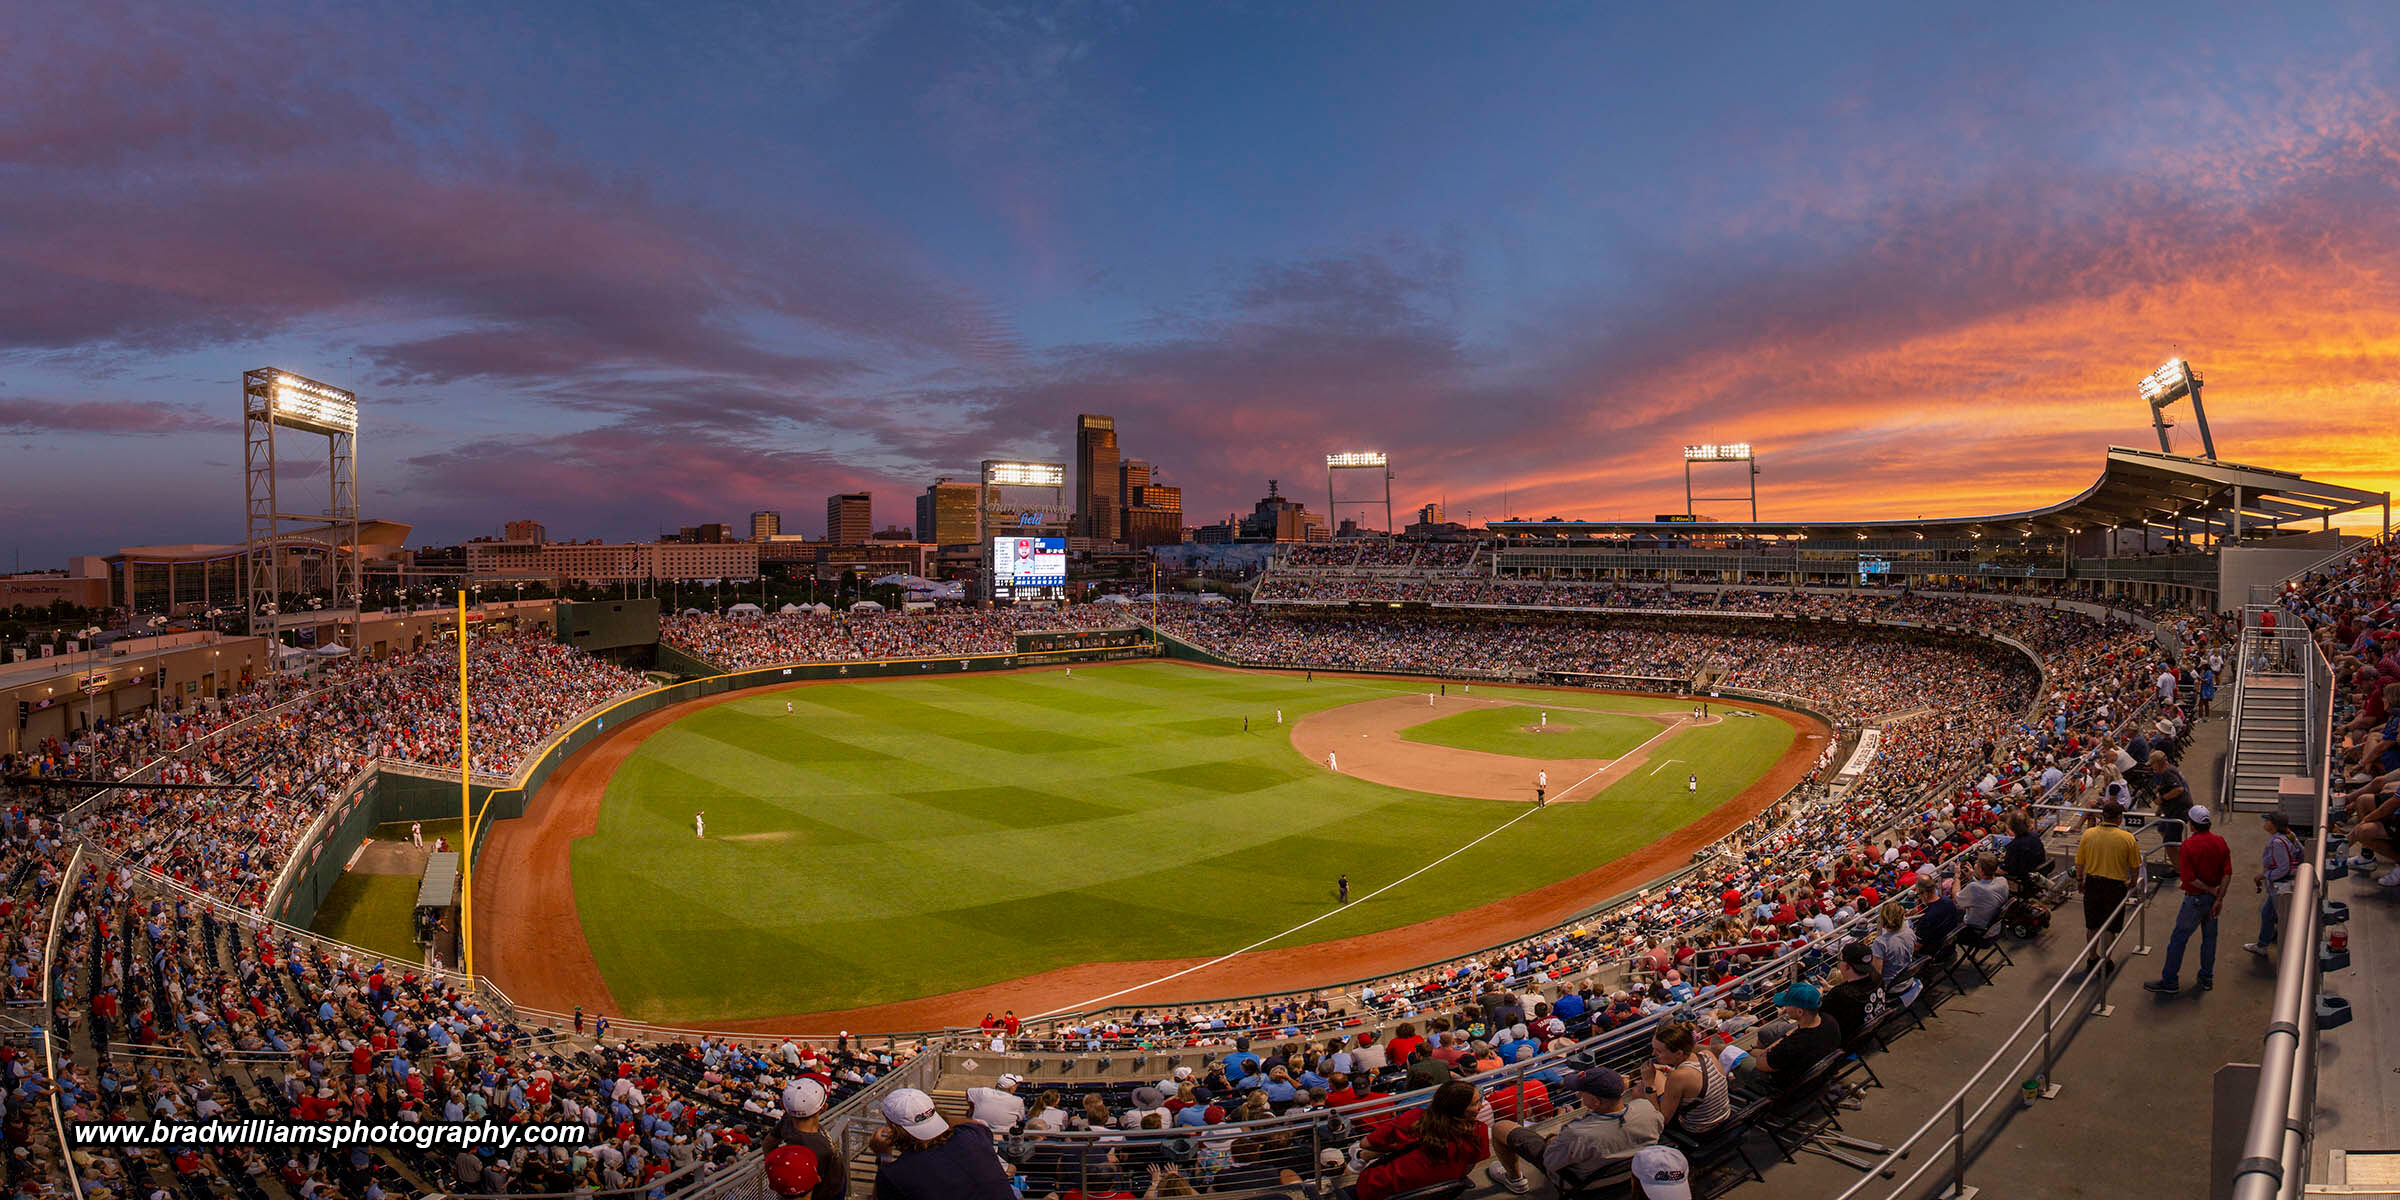 An incredible sunset over Charles Schwab Field Omaha /  TD Ameritrade Park Omaha in June 2022.